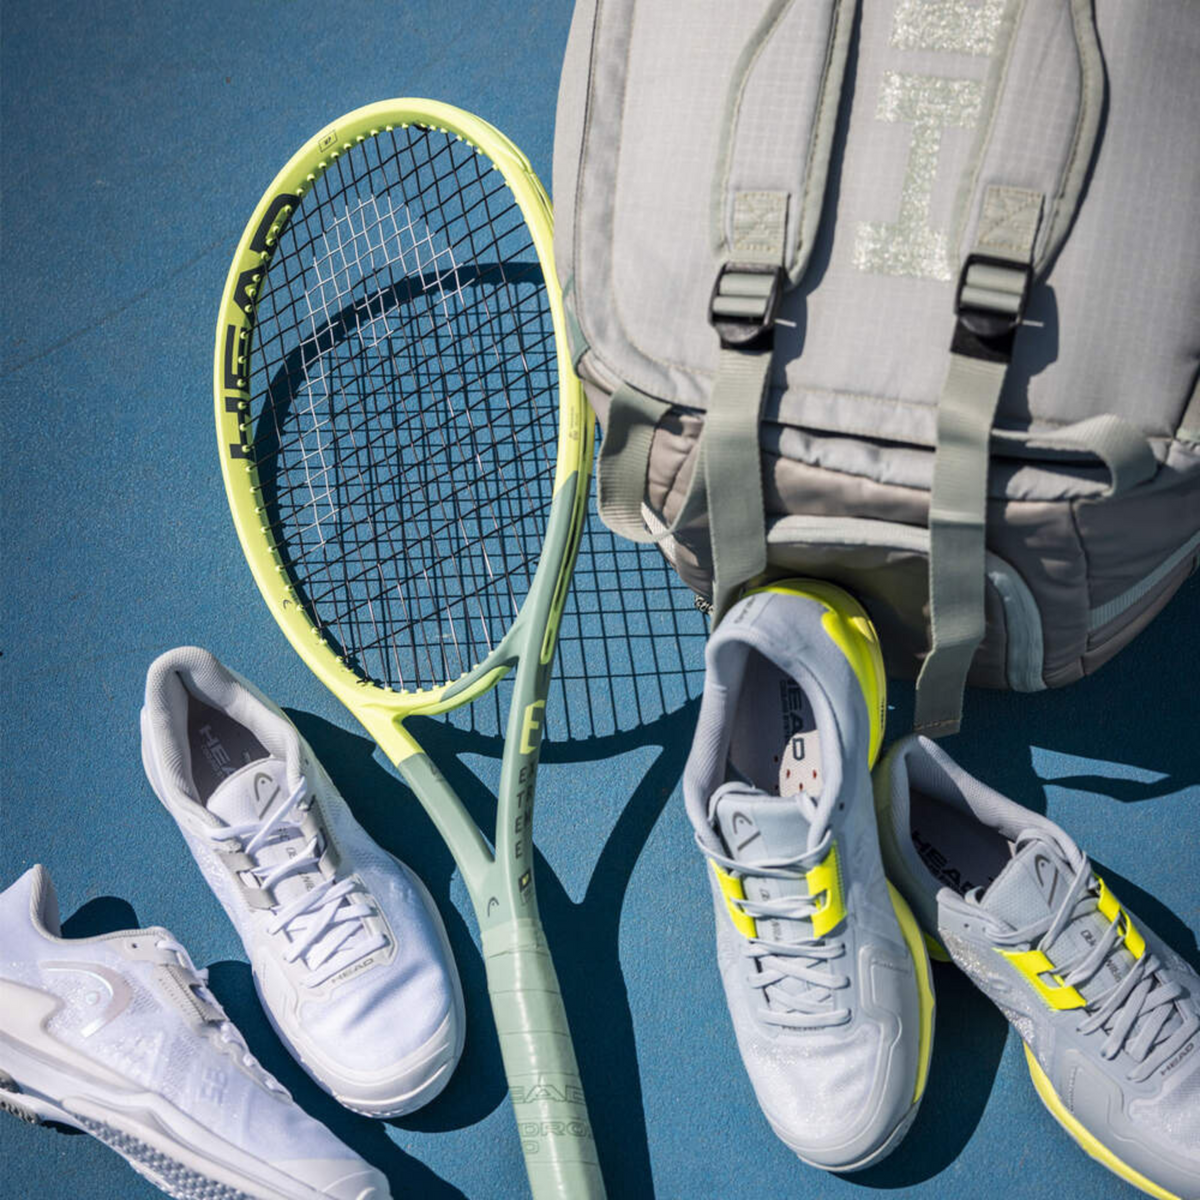 Head lifestyle photo showing shoes bag racquet